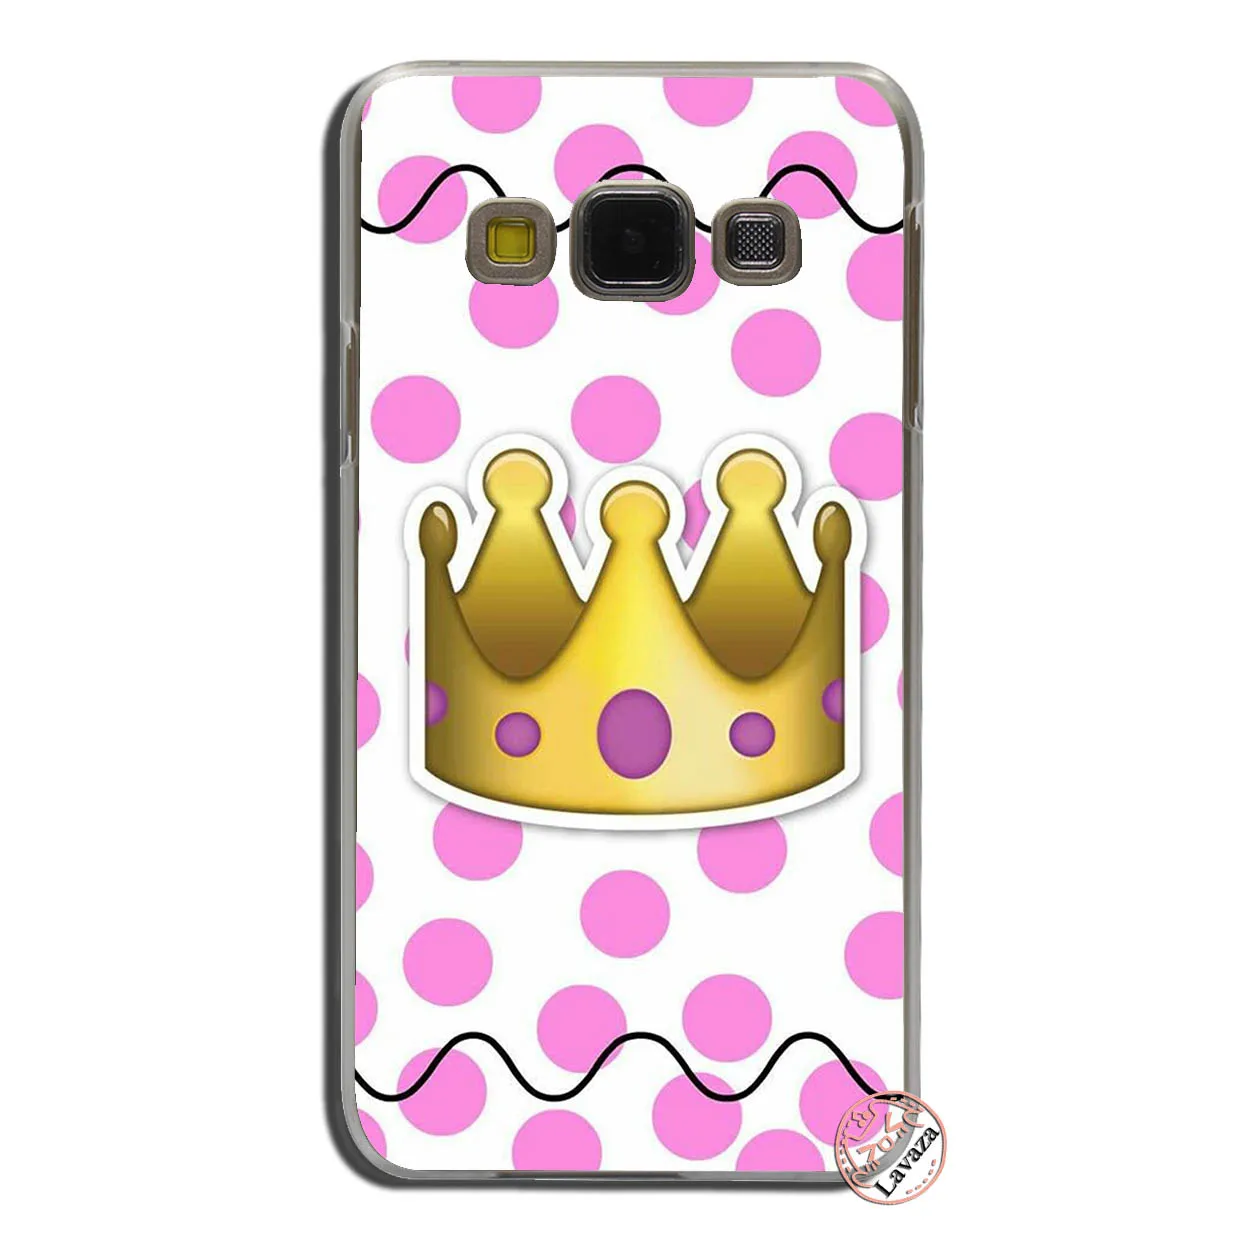 Принцесса queen boss, с проектом король чехол для телефона чехол для samsung Galaxy J8 J7 Duo J6 J5 J4 Plus J2 J3 Prime - Цвет: 7